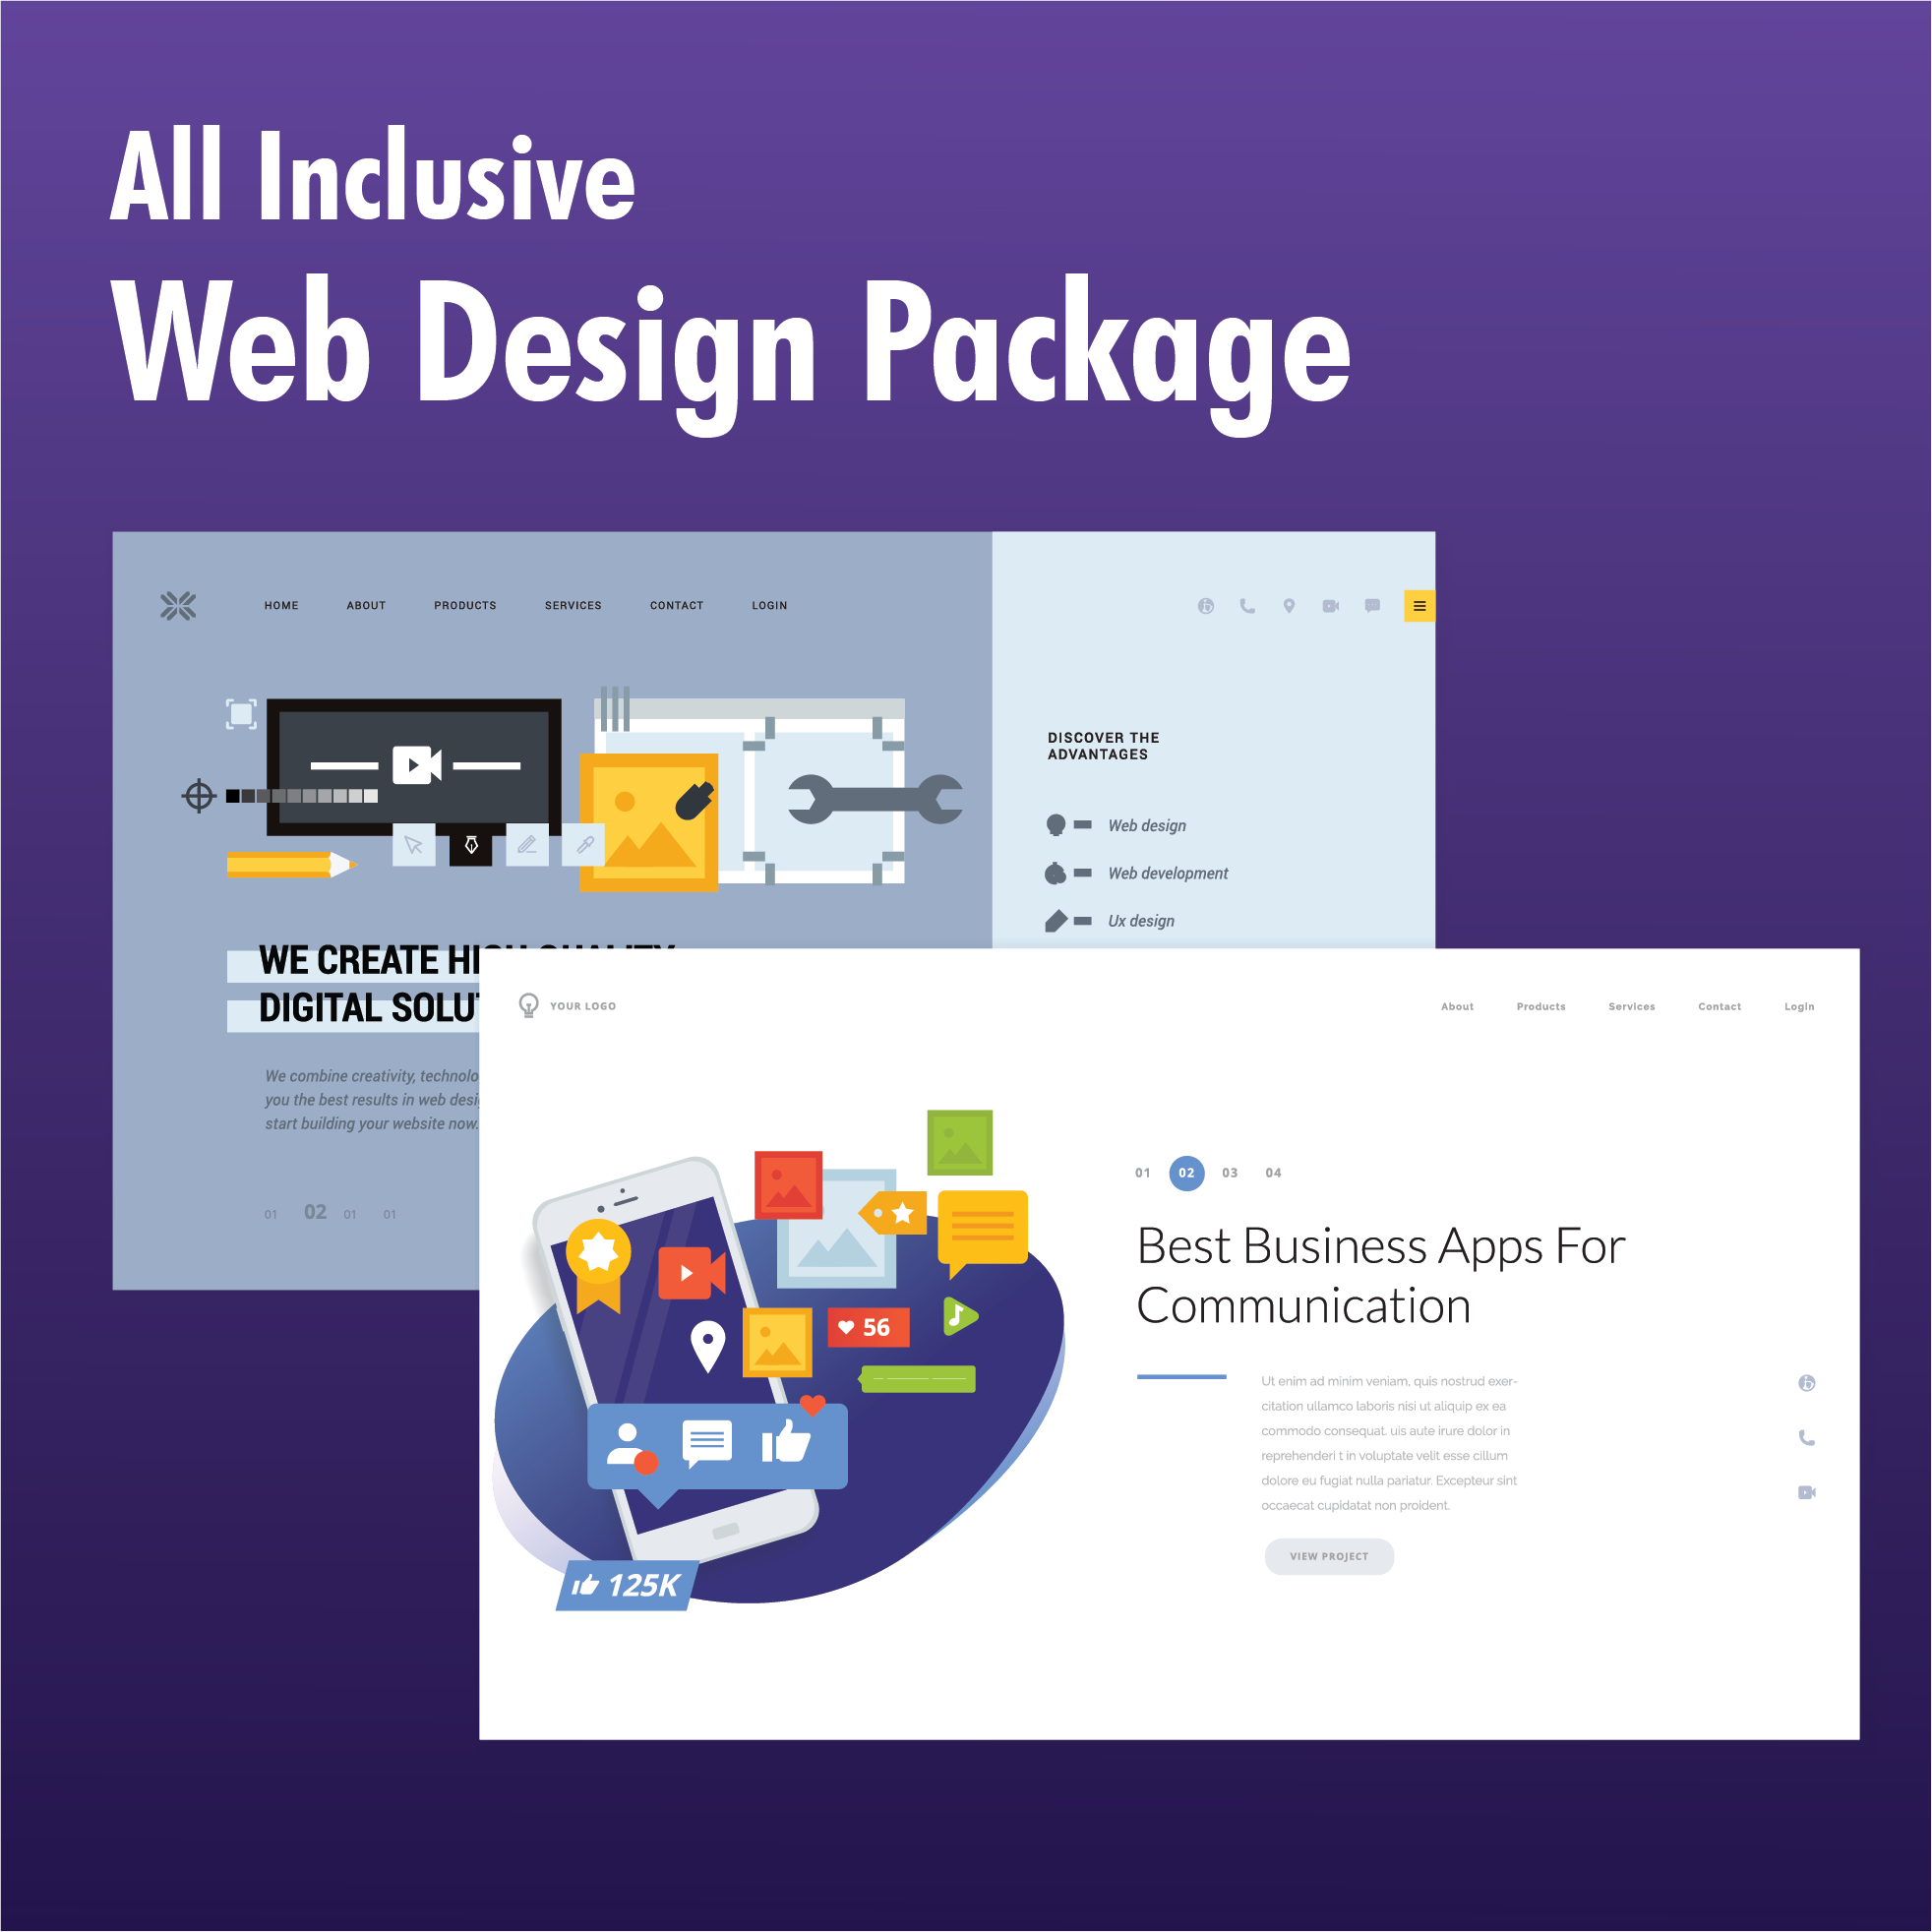 All Inclusive Web Design Package